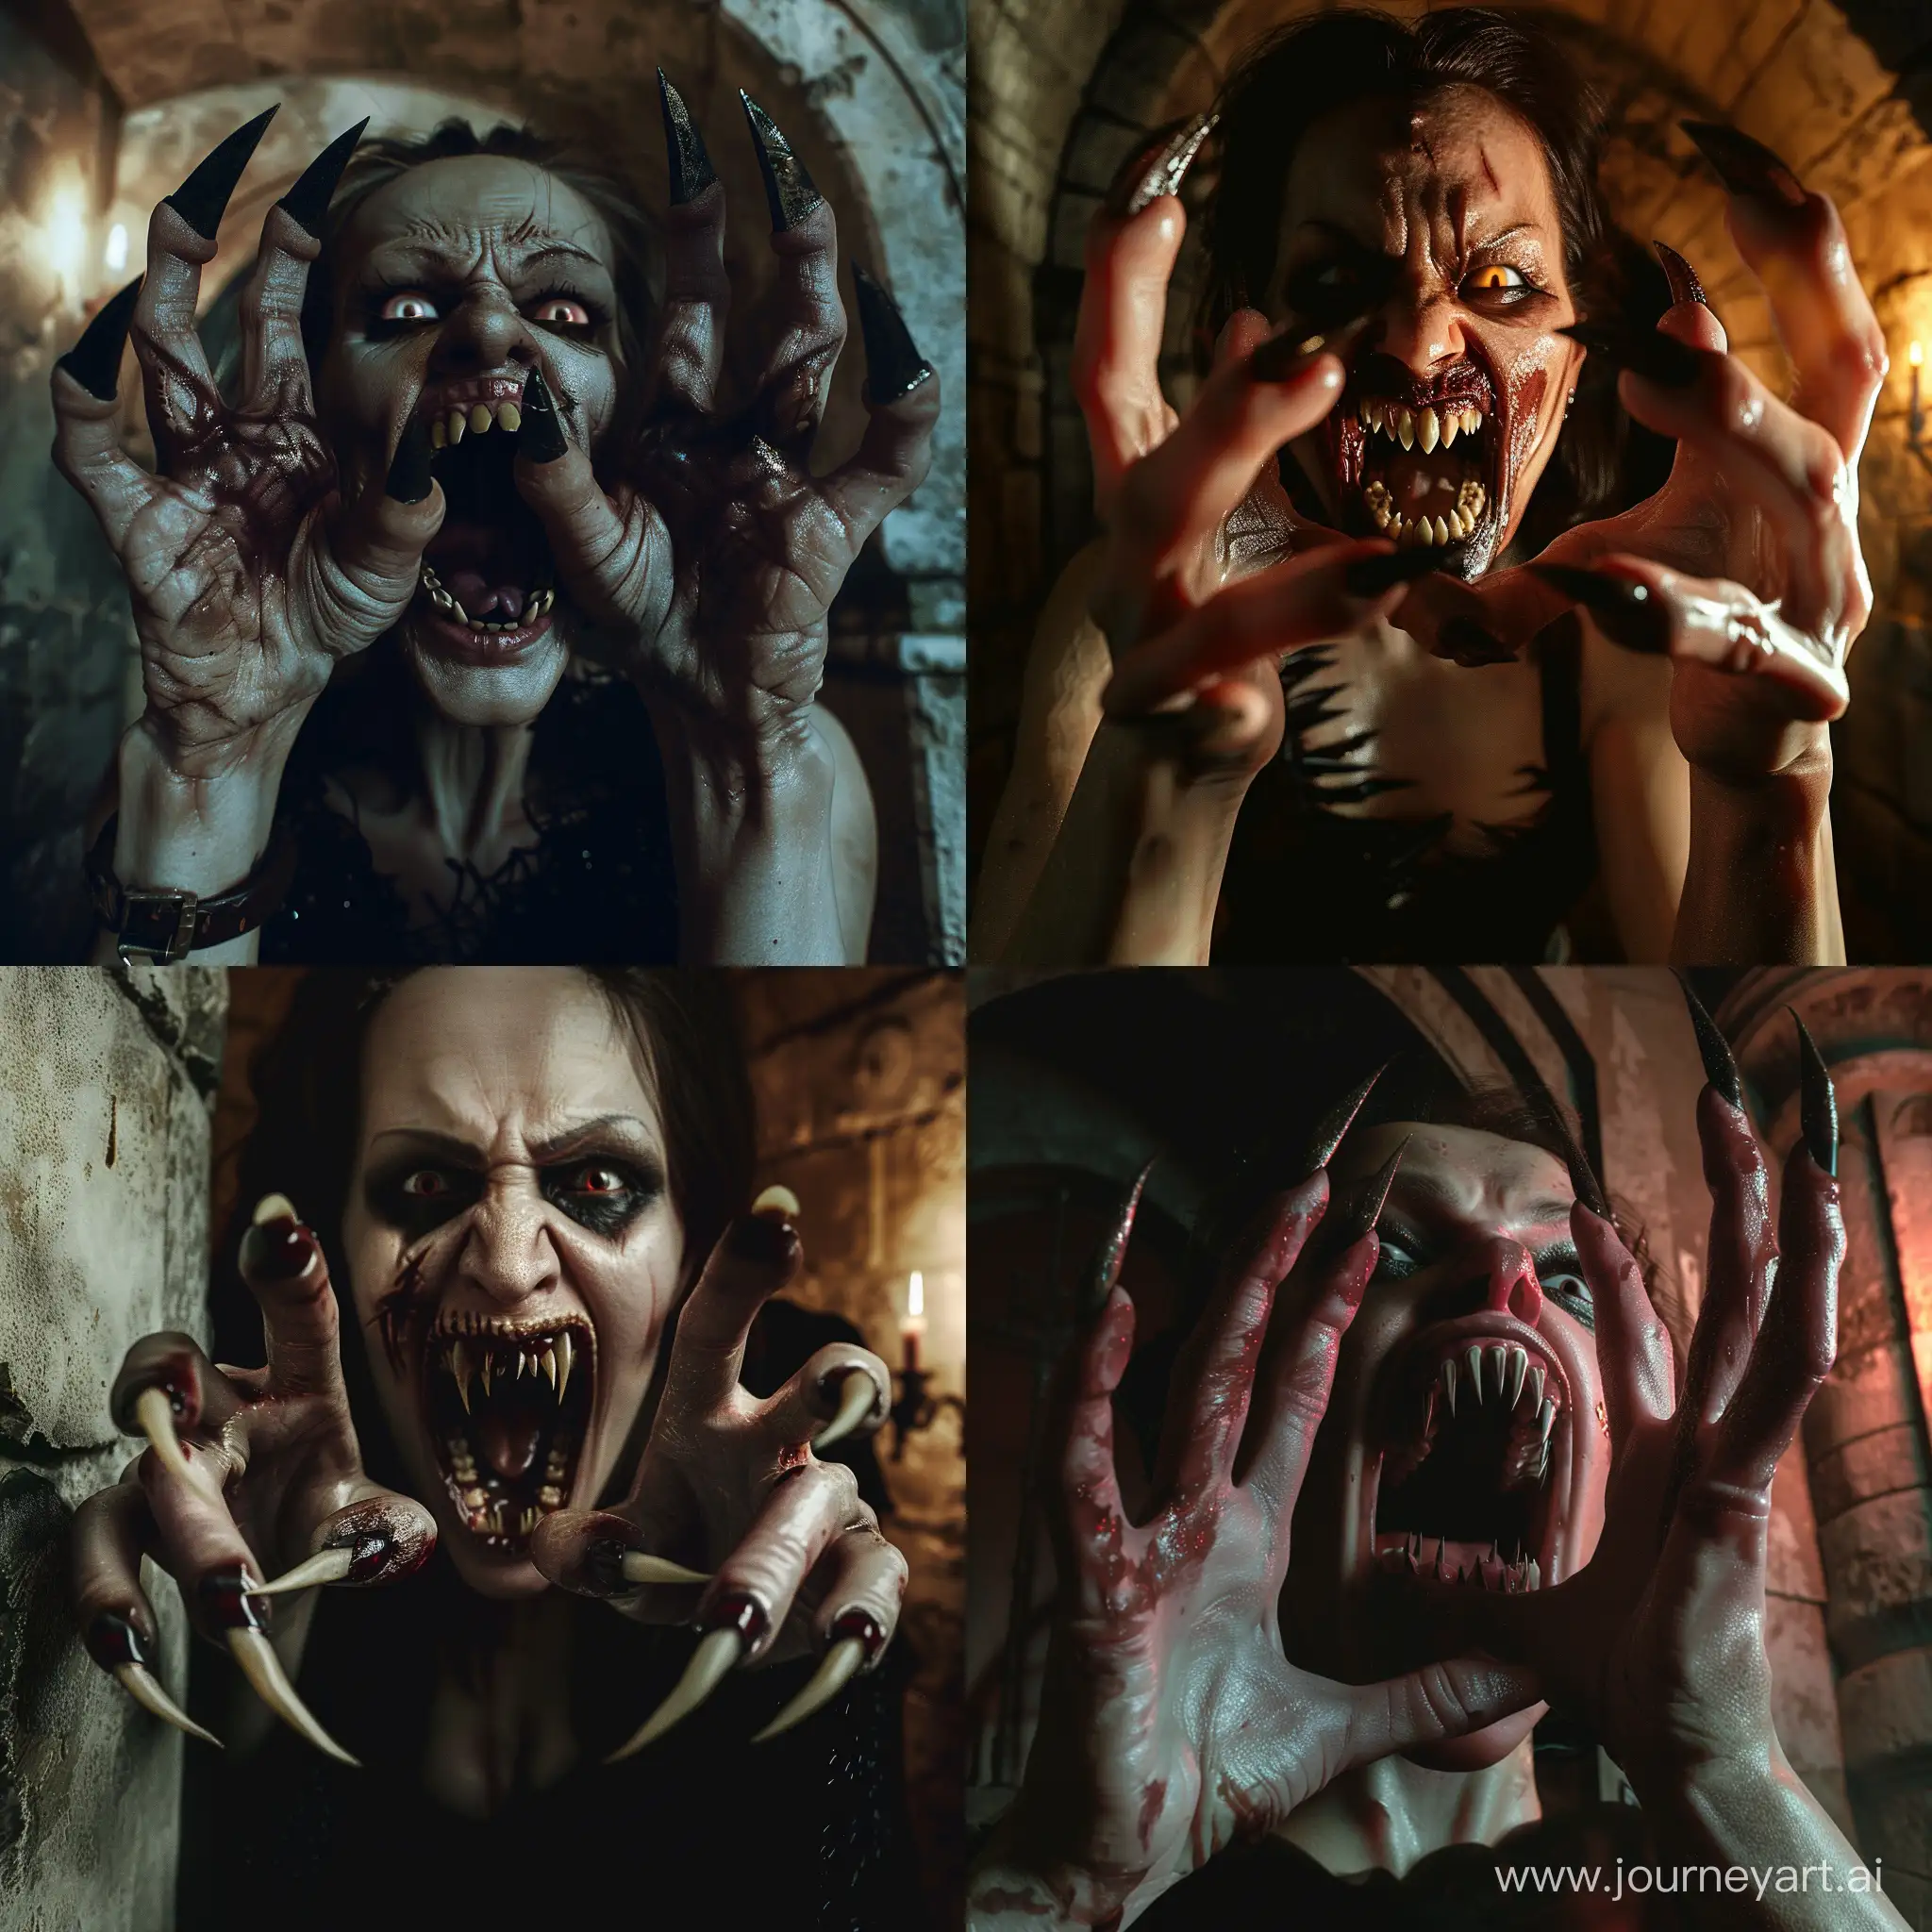 Terrifying-Nosferatu-Vampire-Woman-Attacks-in-Old-Crypt